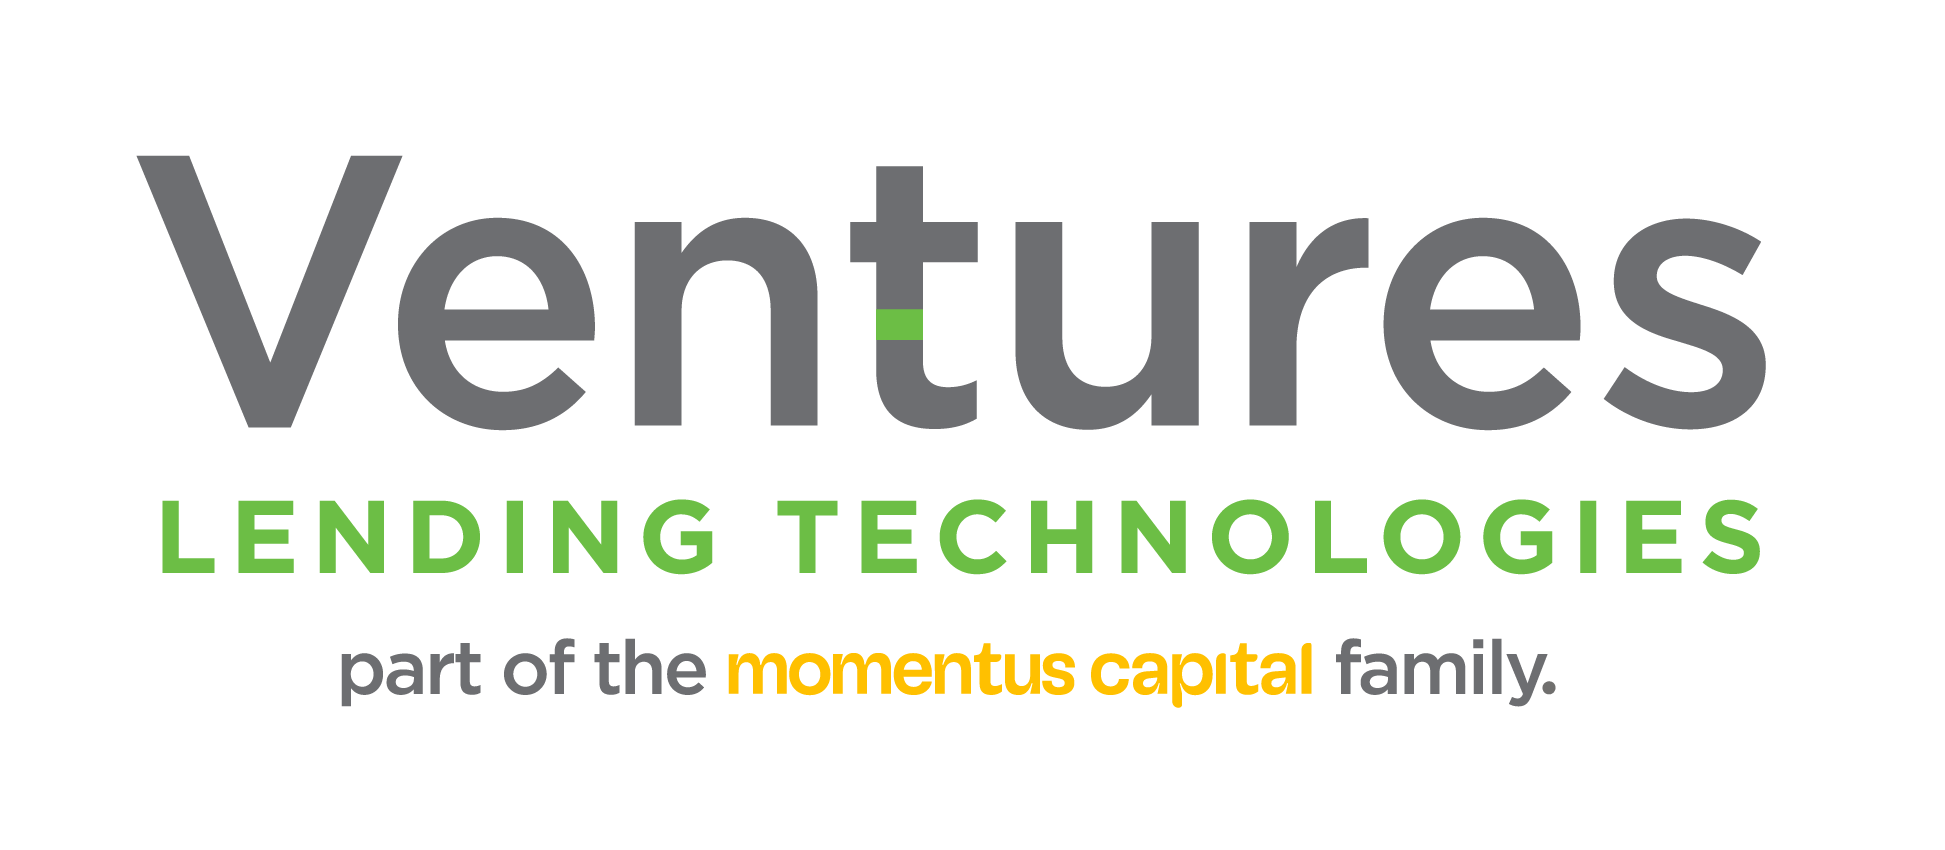 Ventures logo